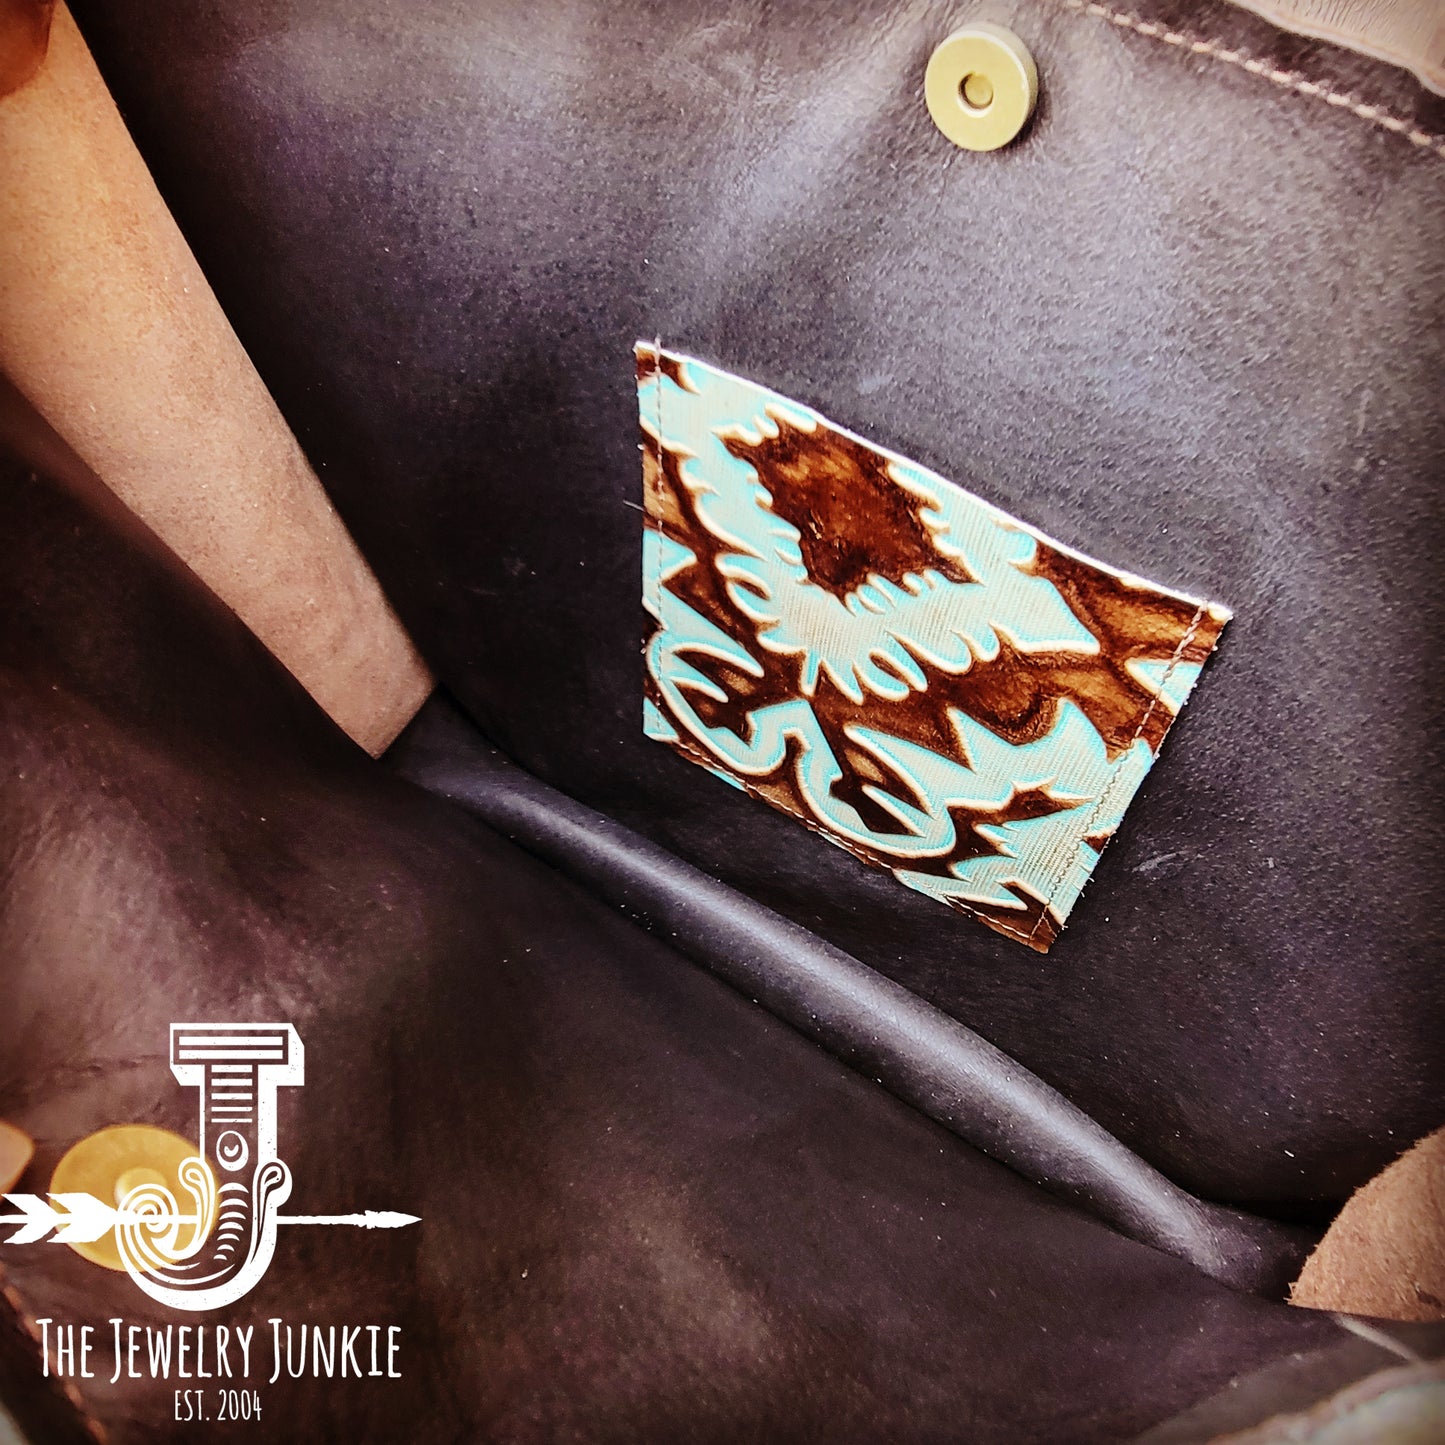 Tejas Leather Bucket Hide Handbag with Turquoise Laredo Accent 506u